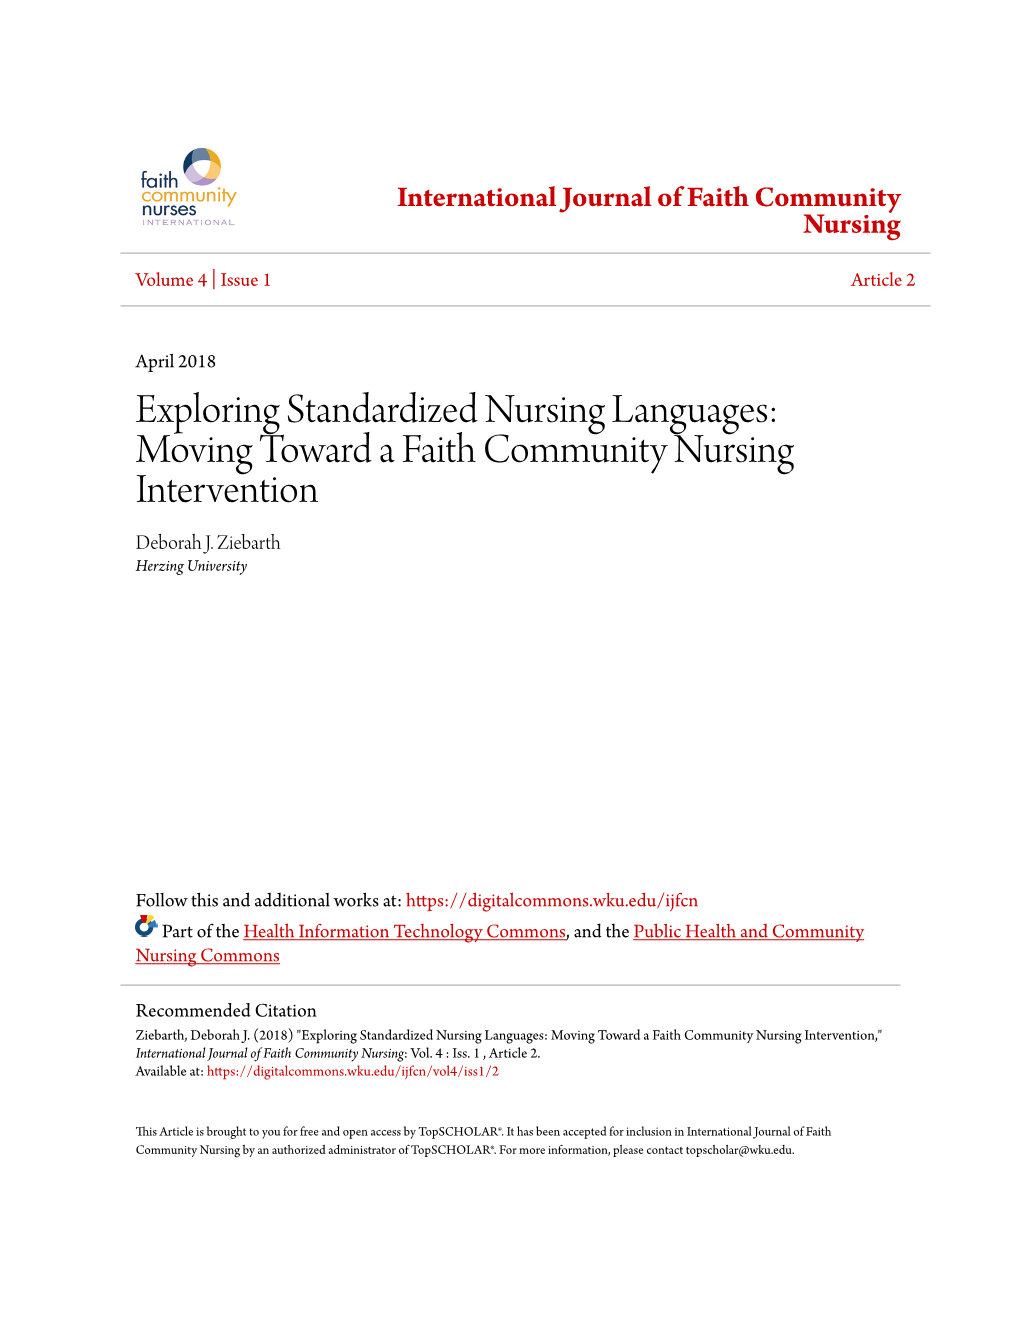 Exploring Standardized Nursing Languages: Moving Toward a Faith Community Nursing Intervention Deborah J